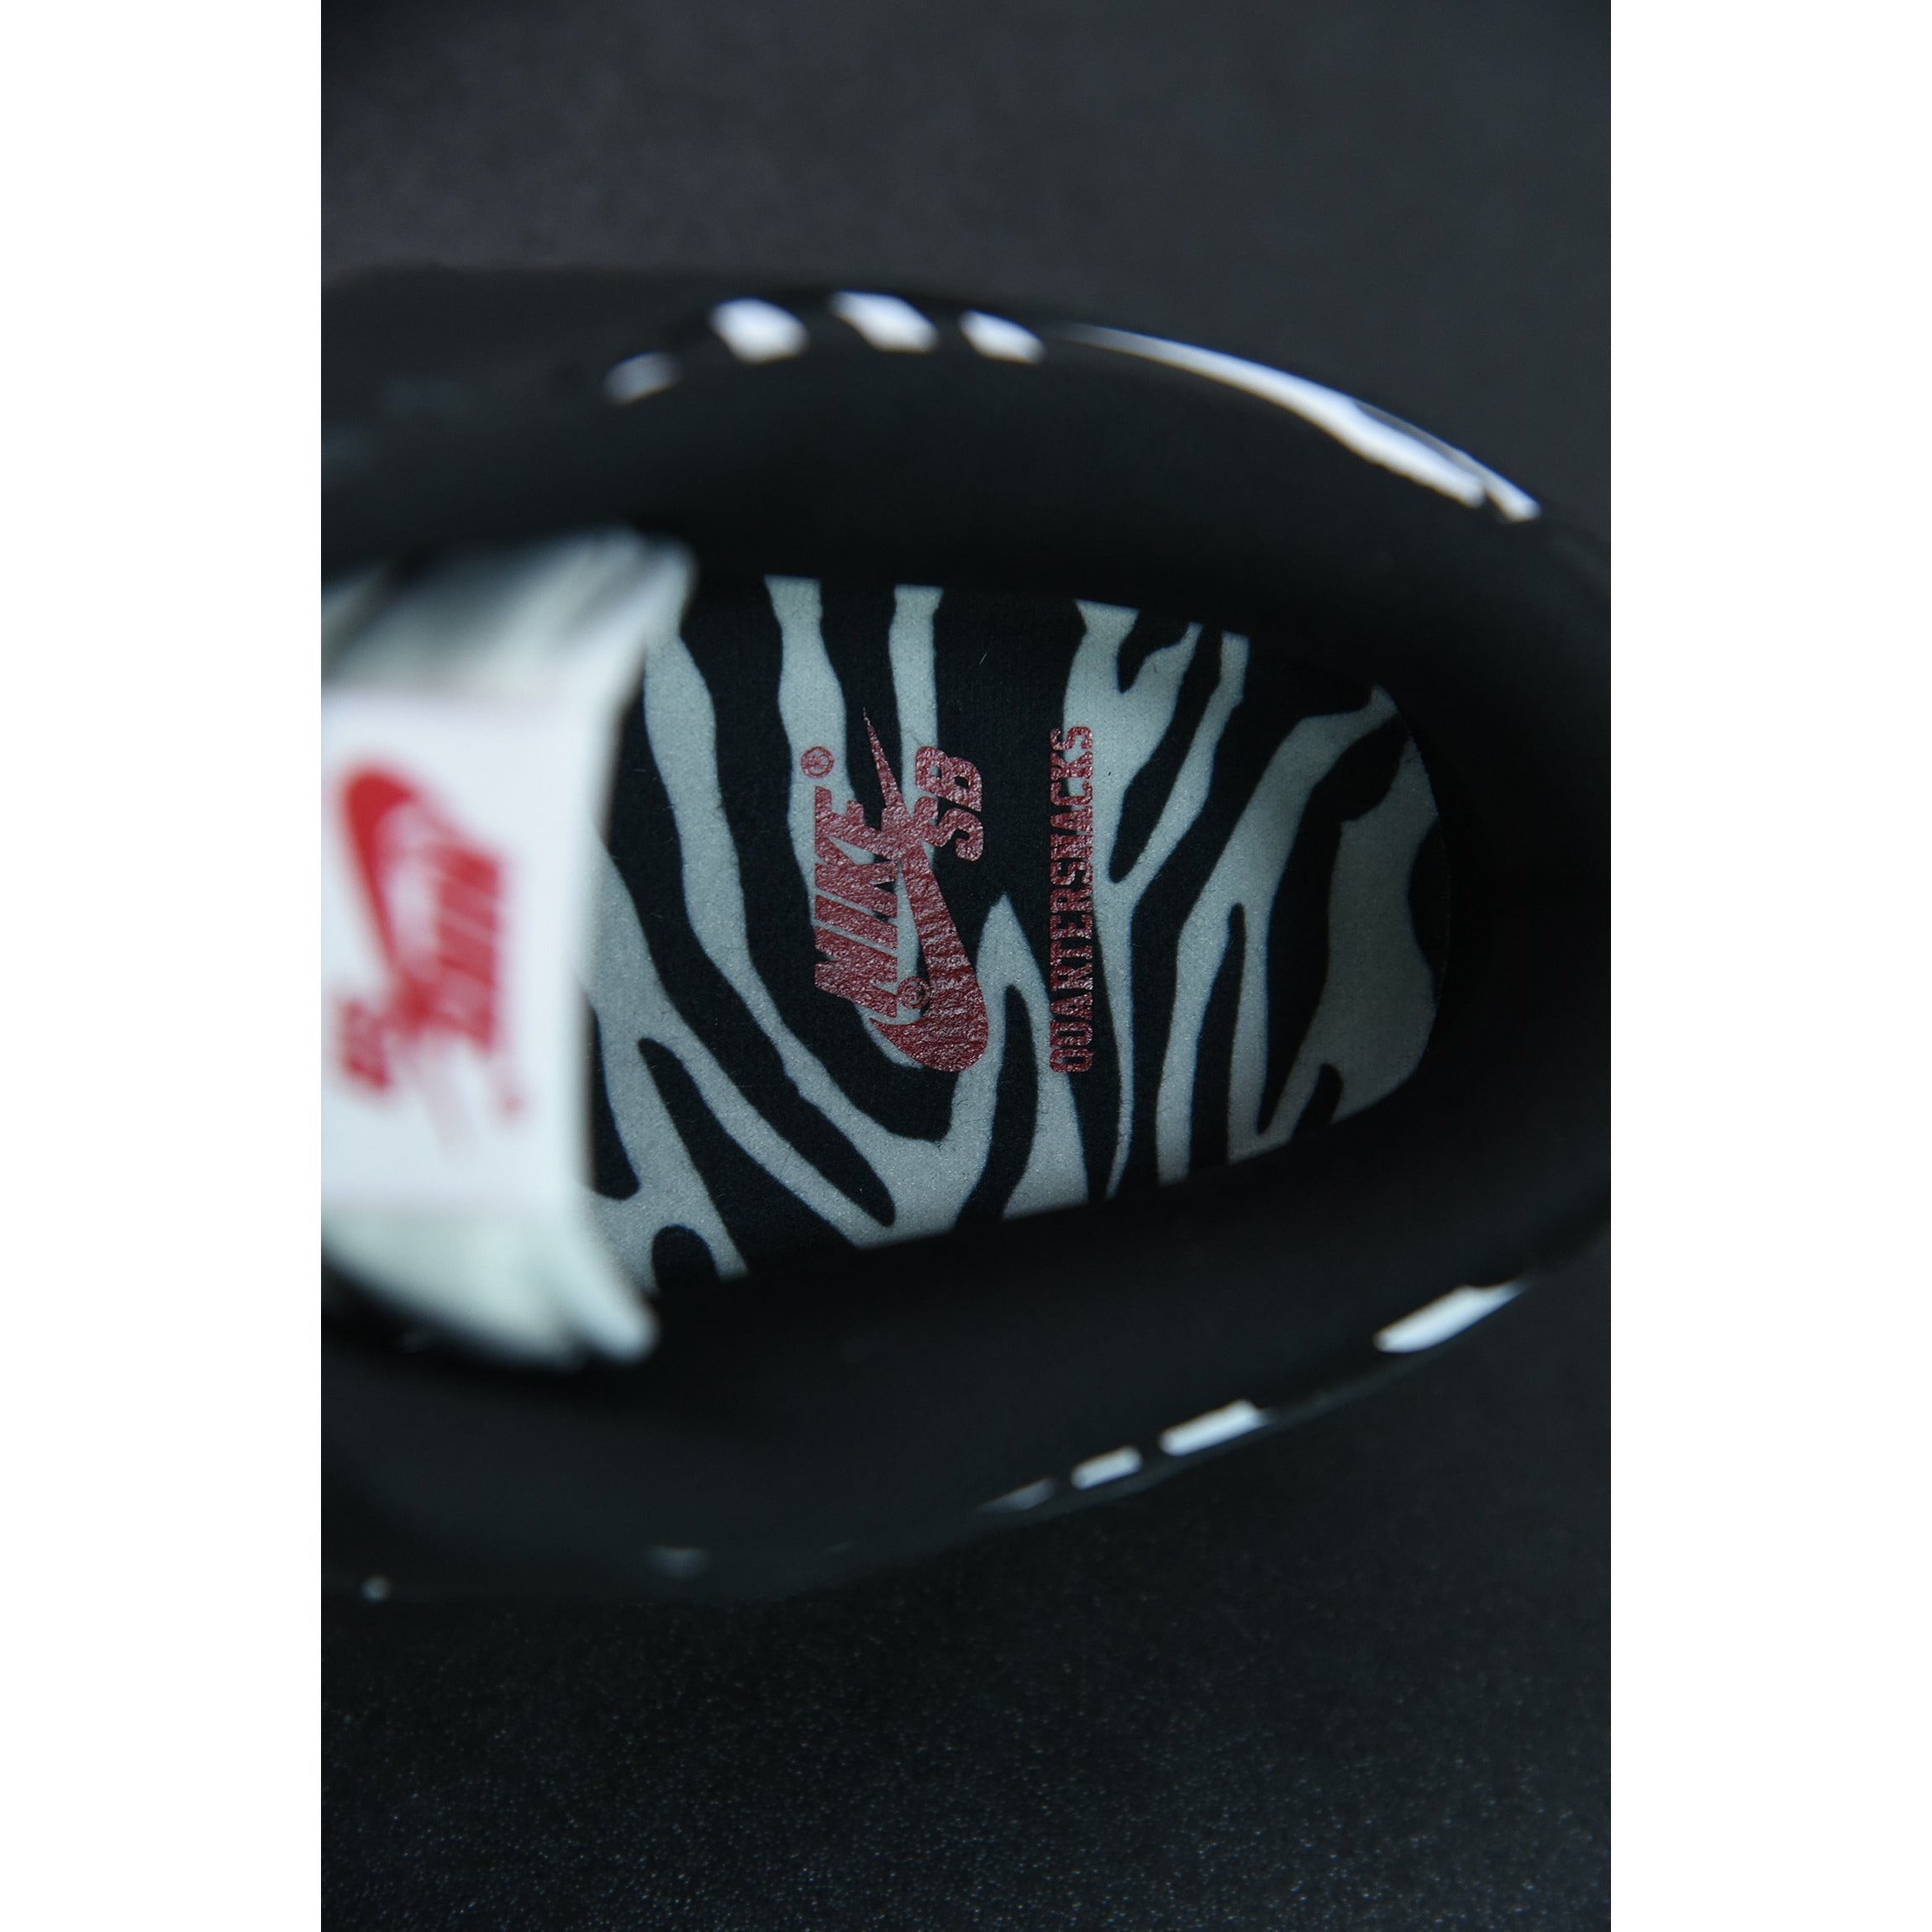 Quartersnacks x Dunk Low SB 'Little Debbie’s Zebra Cakes'